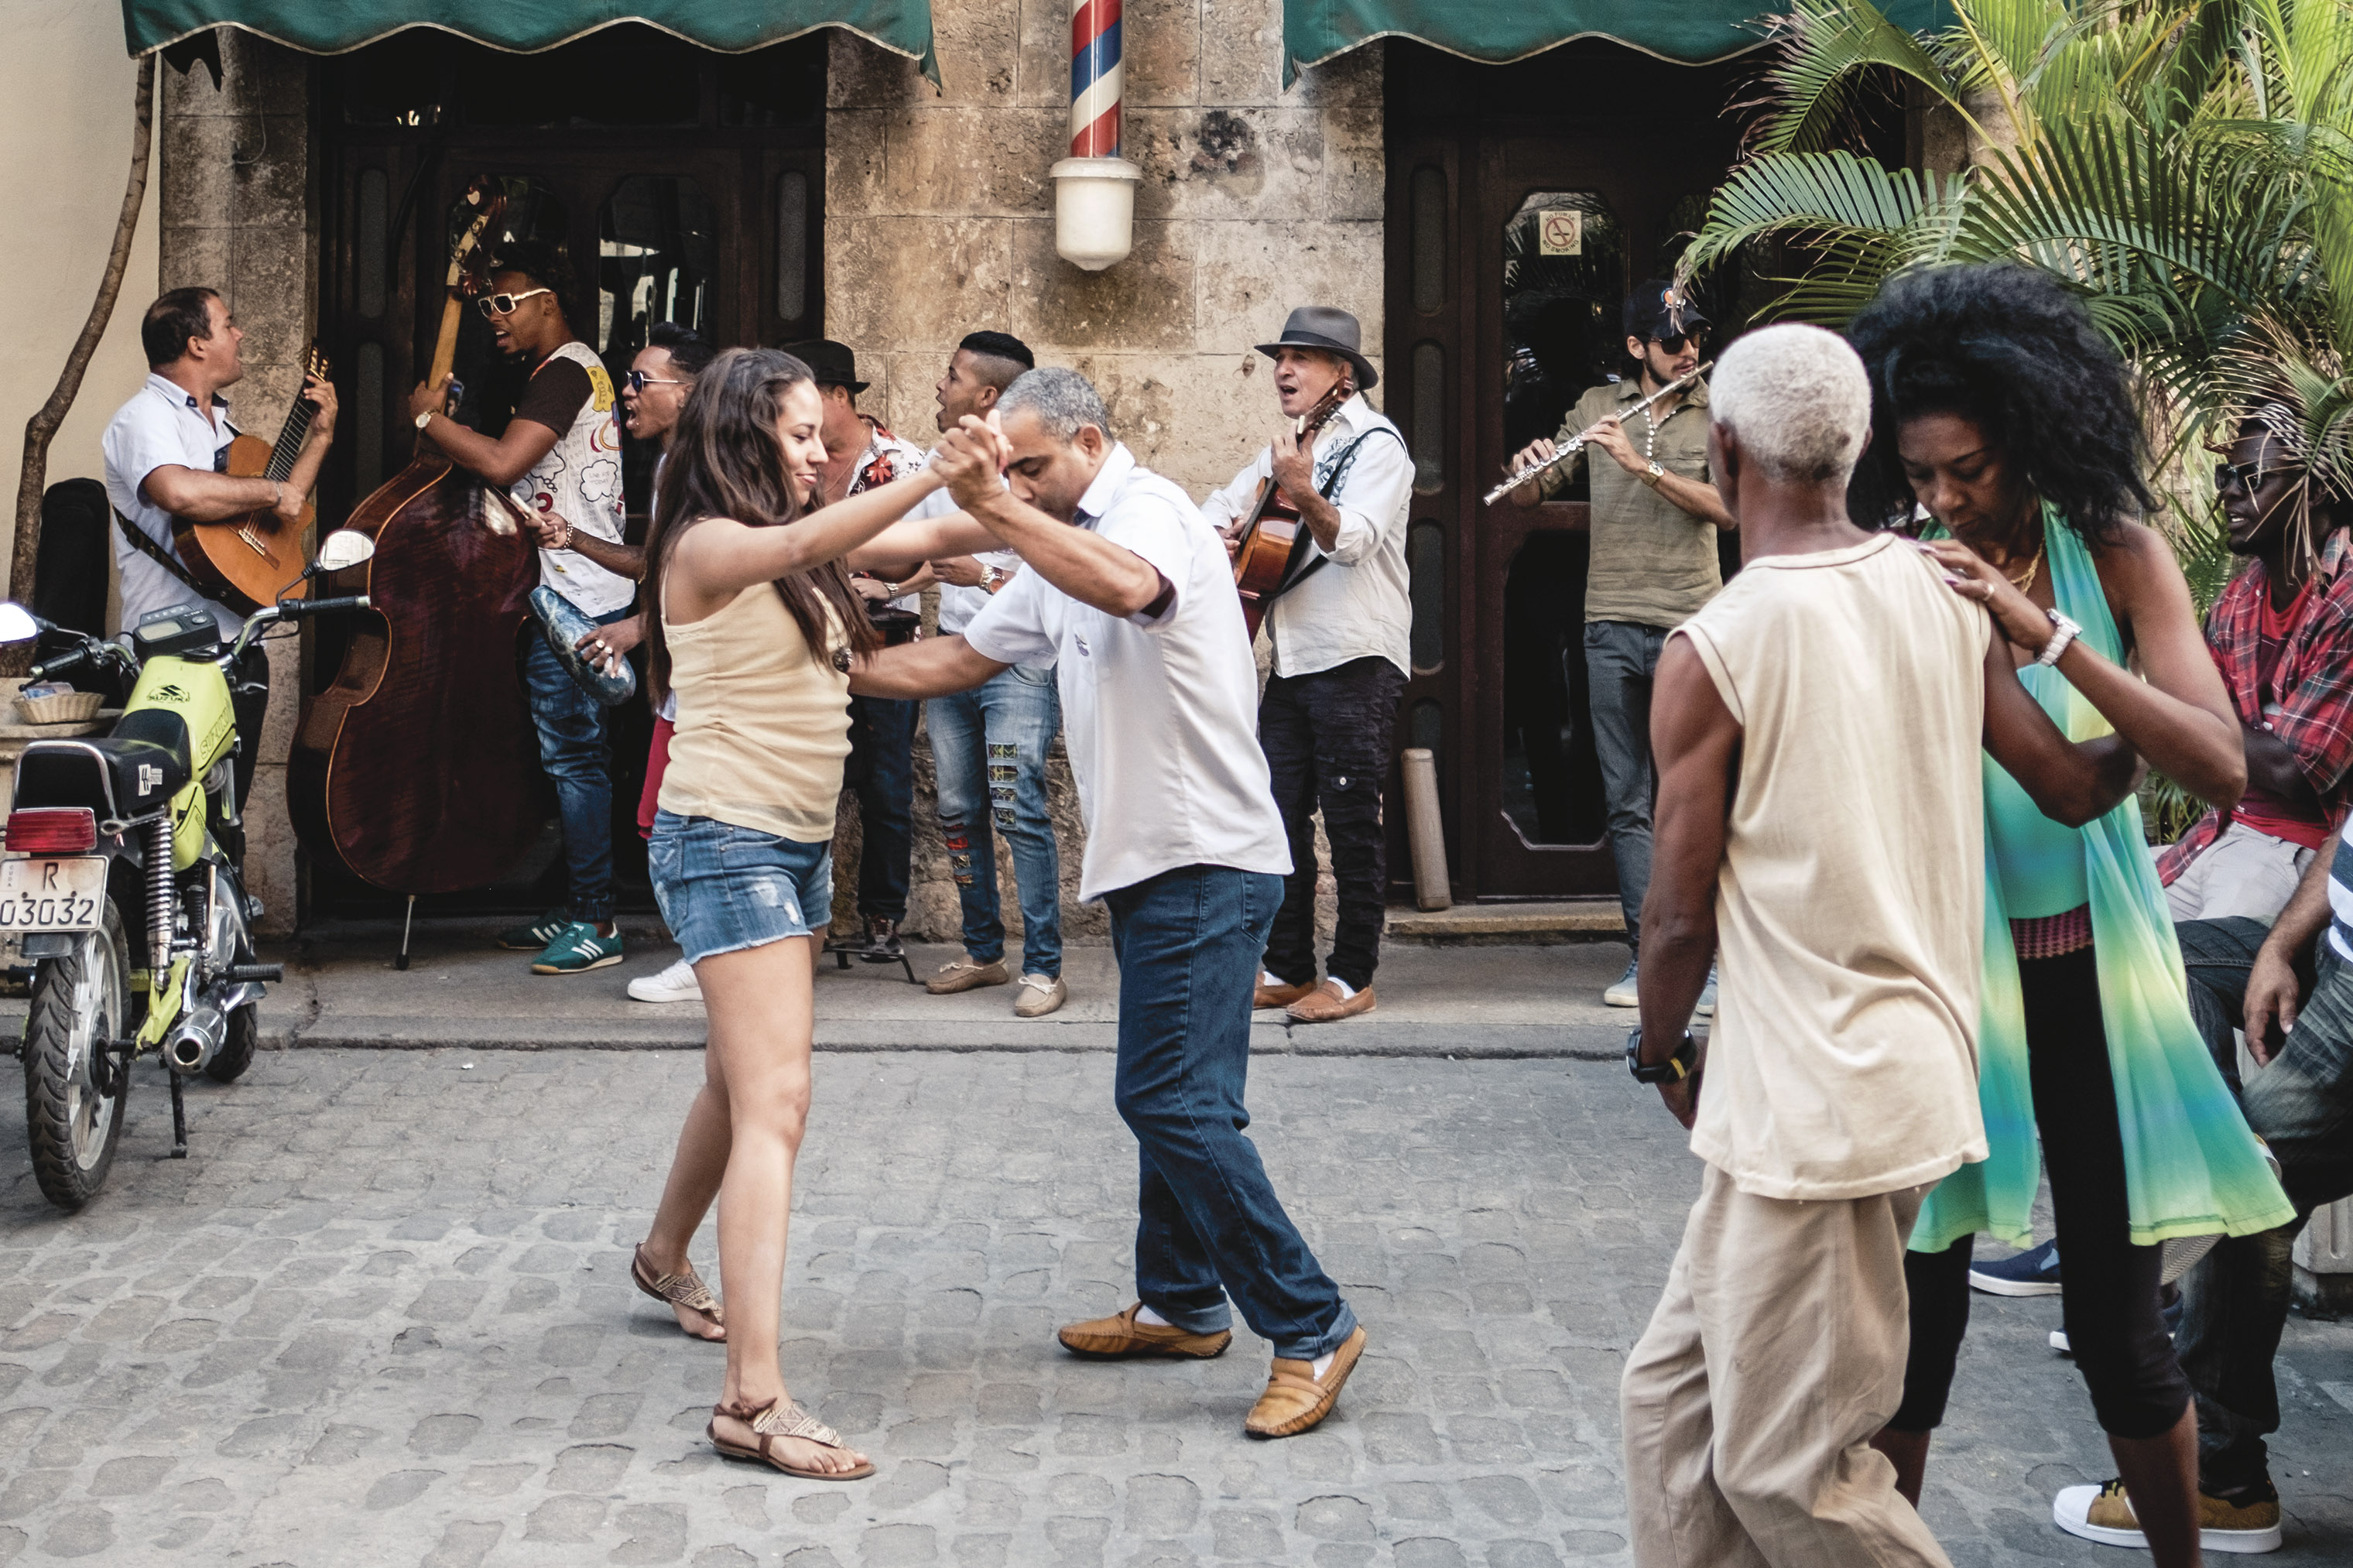 People dance in the streets of Old Havana.